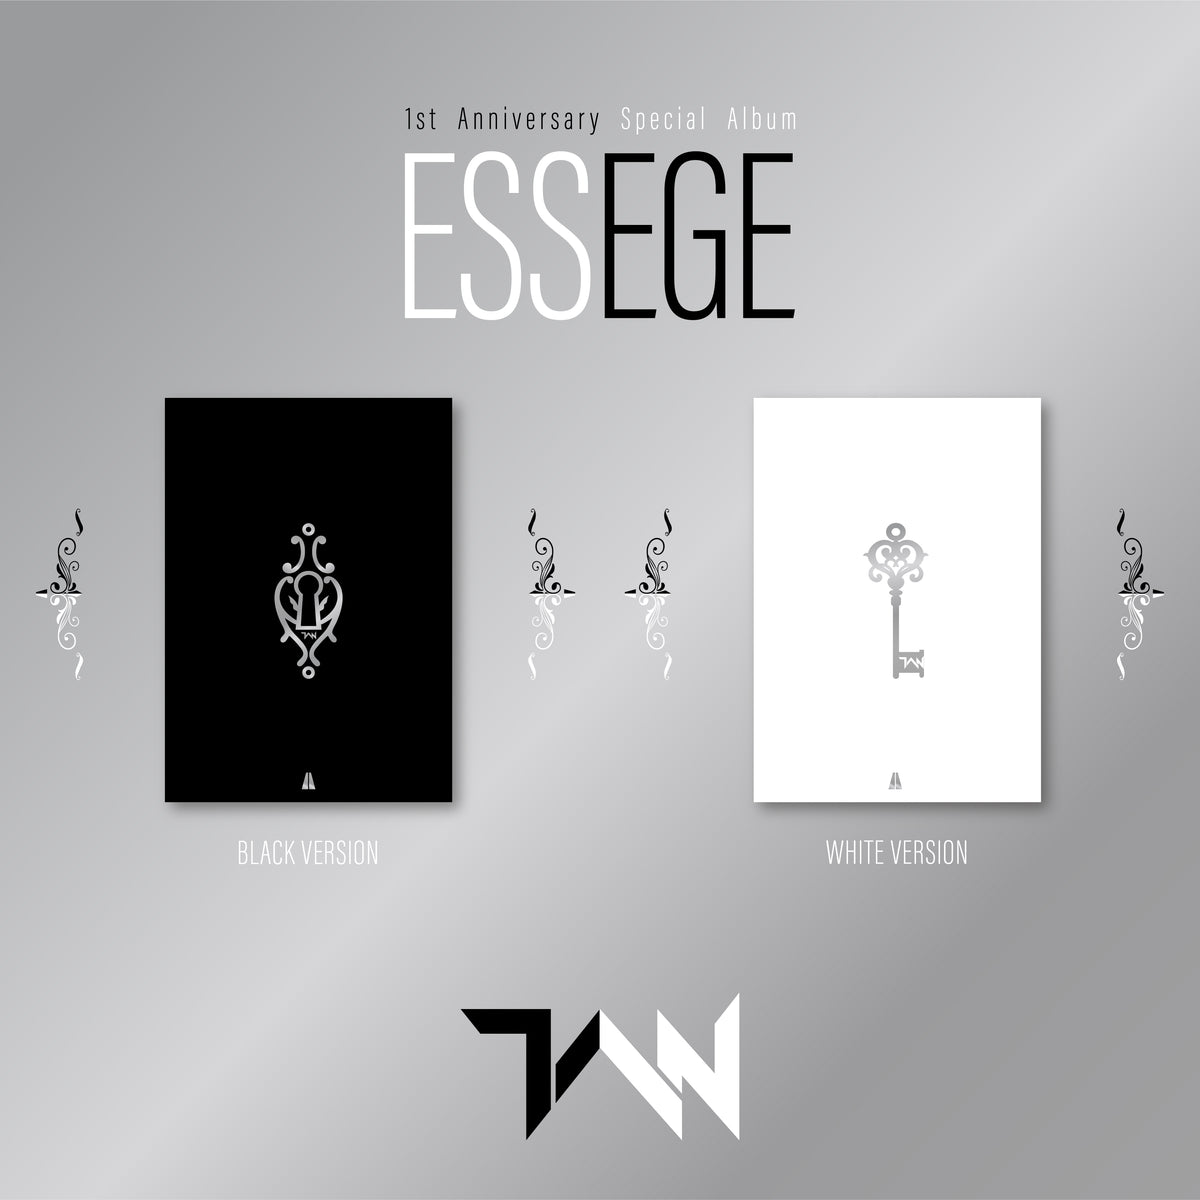 TAN - 1st Anniversary Special Album [ESSEGE]